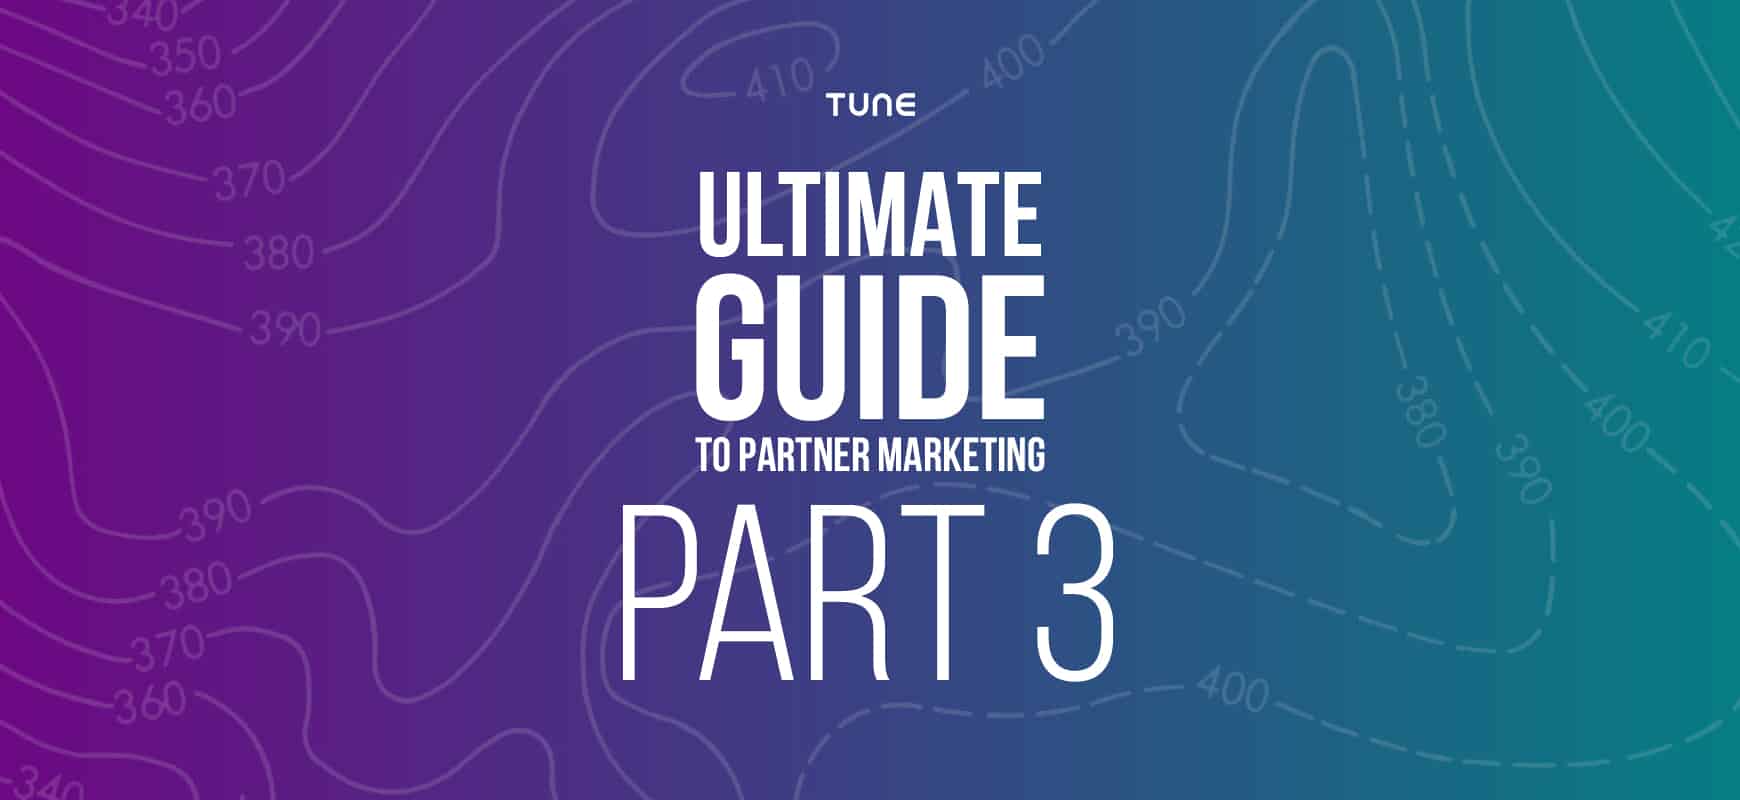 Ultimate Guide to Partner Marketing, Part 3 - Partnership Marketing